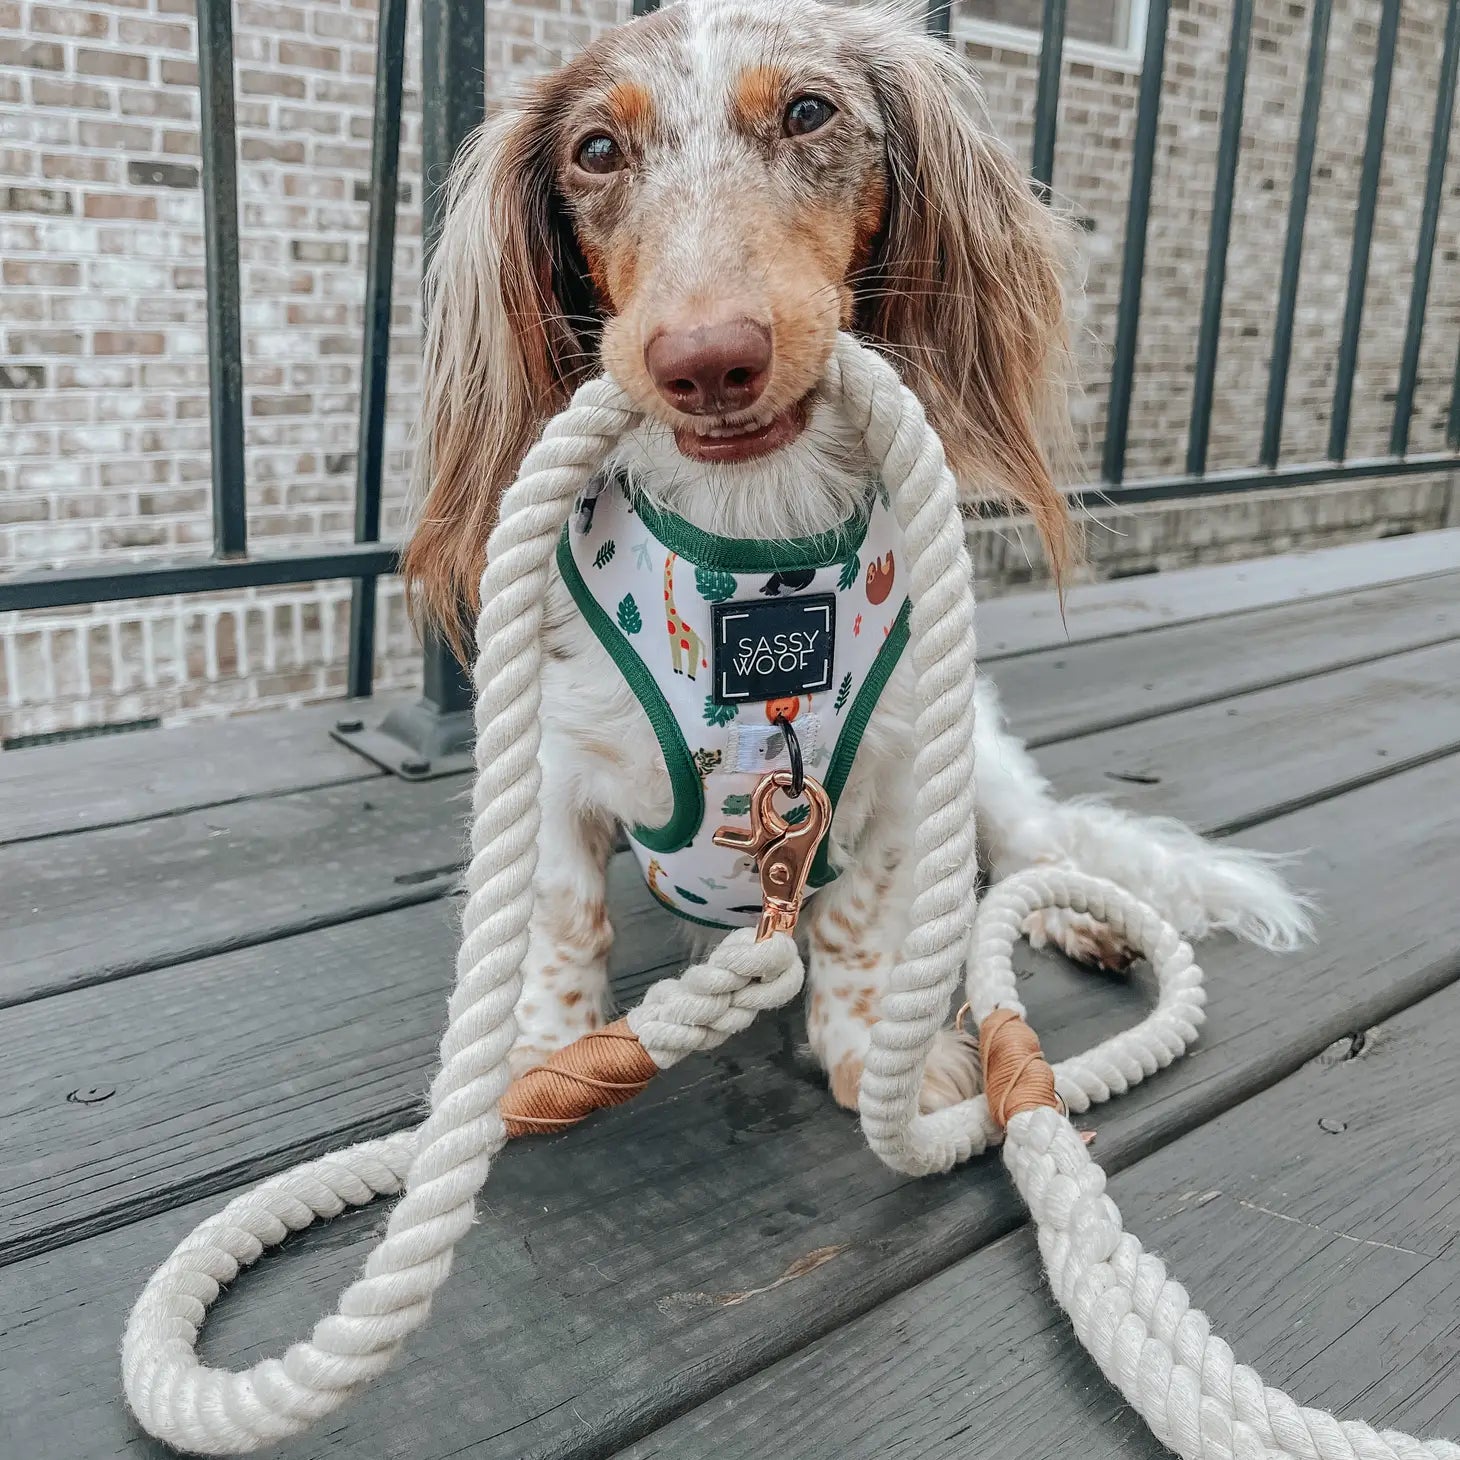 Dog Rope Leash